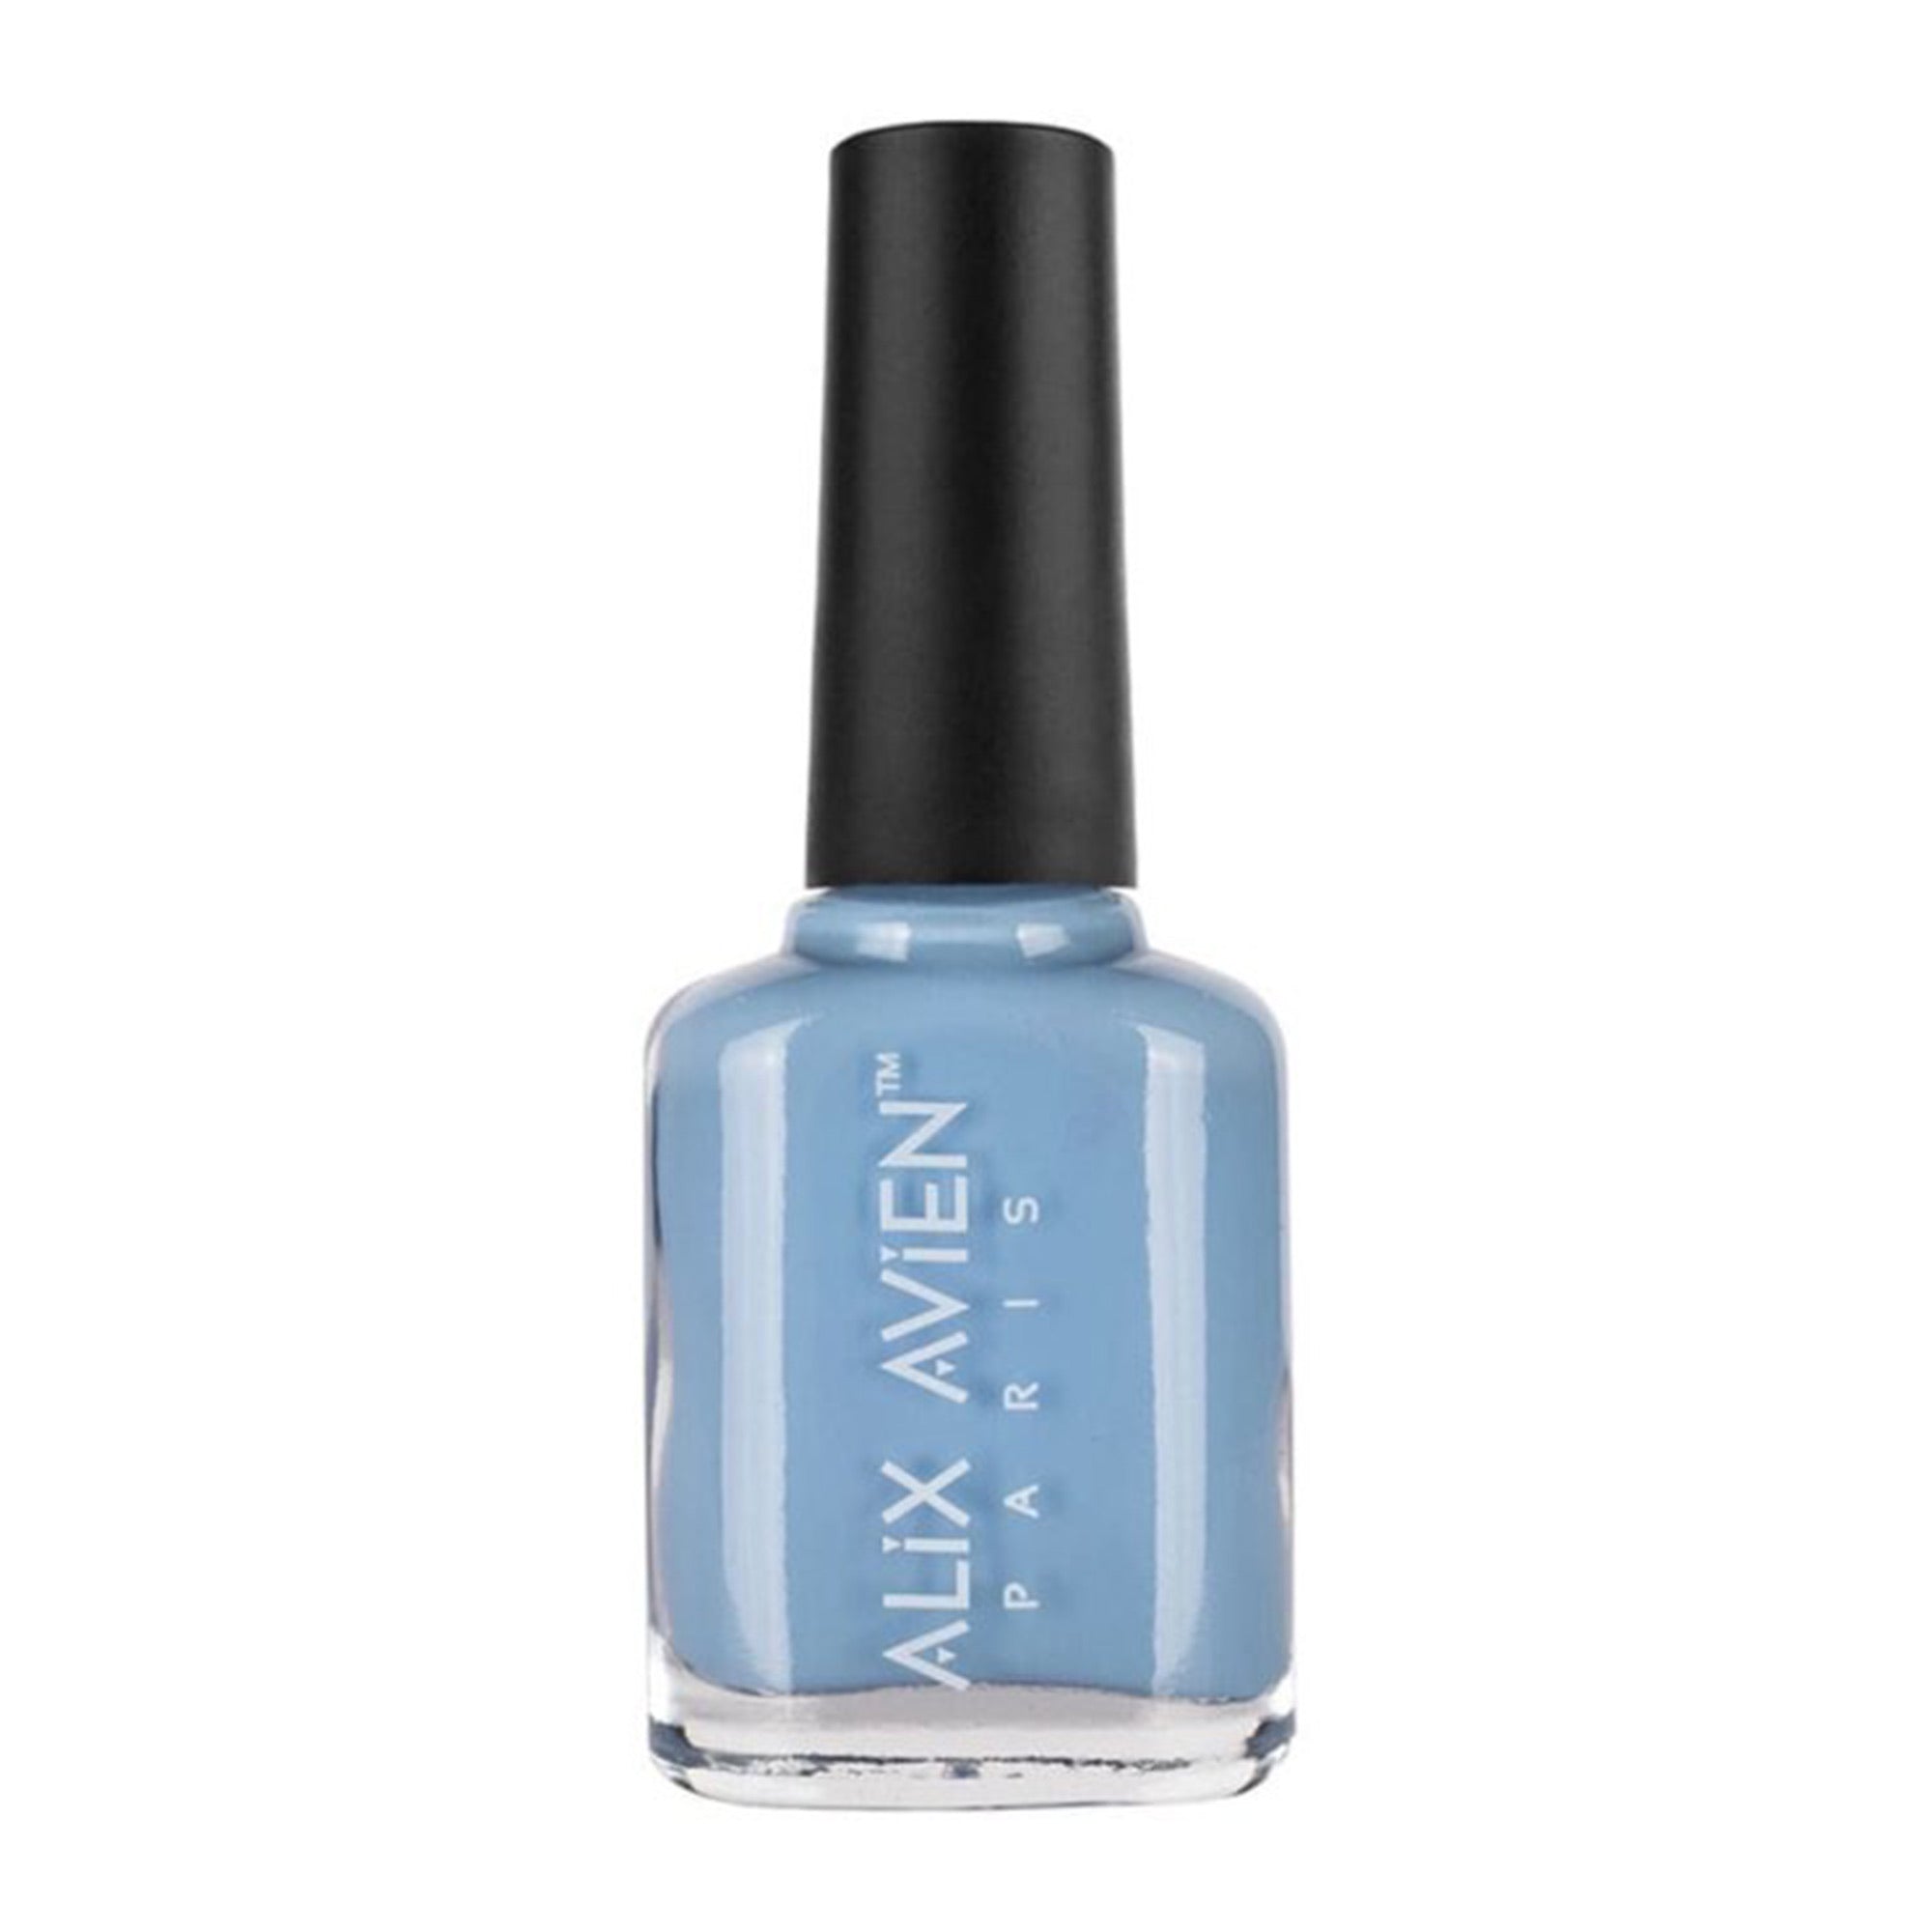 Alix Avien - Nail Polish No.63 (Pastel Blue)